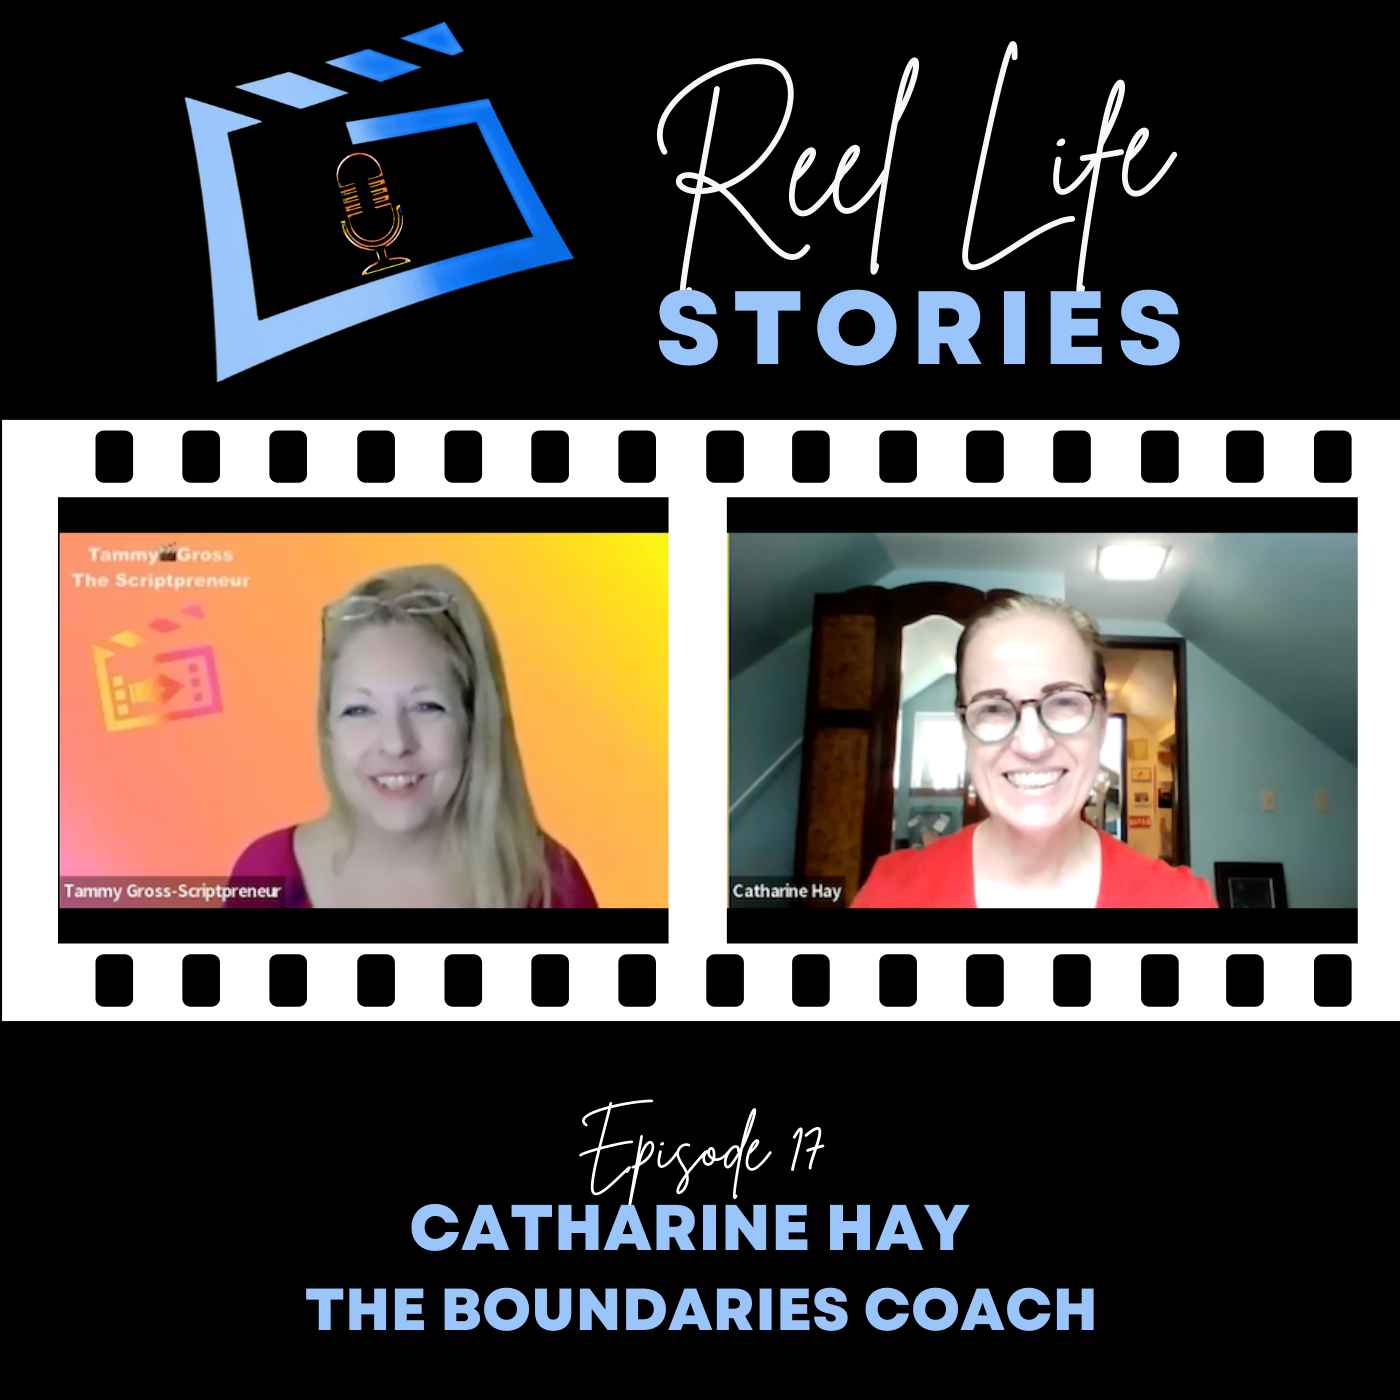 CATHARINE HAY - The Boundaries Coach